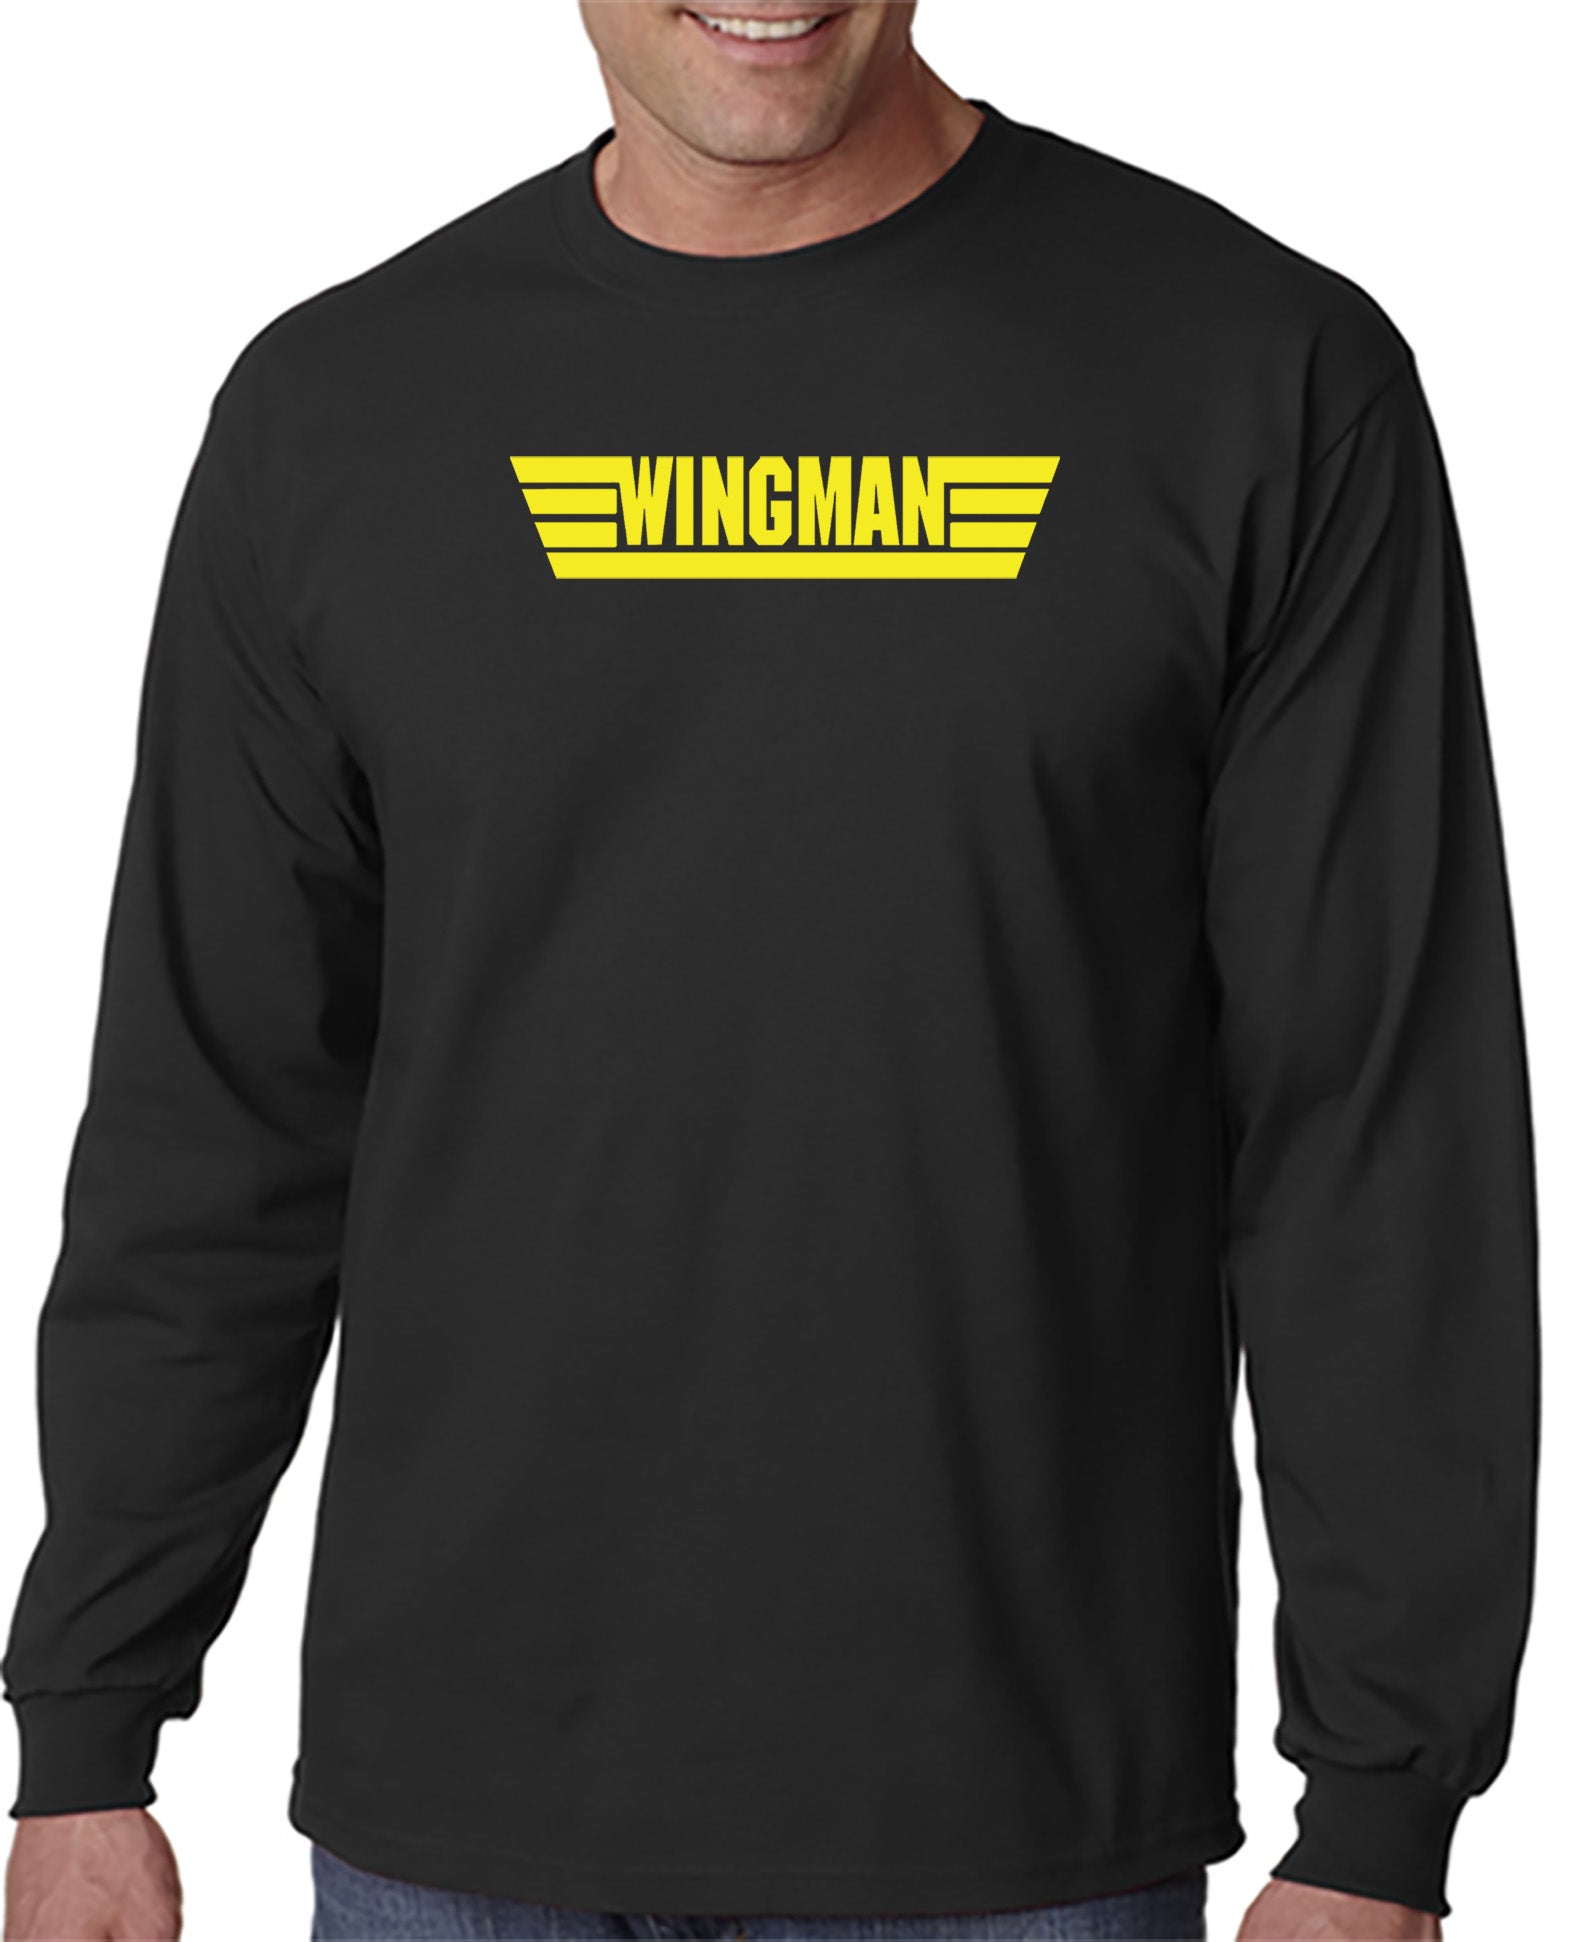 Wingman Top Gun T Shirt Funny T Shirt Designerteez